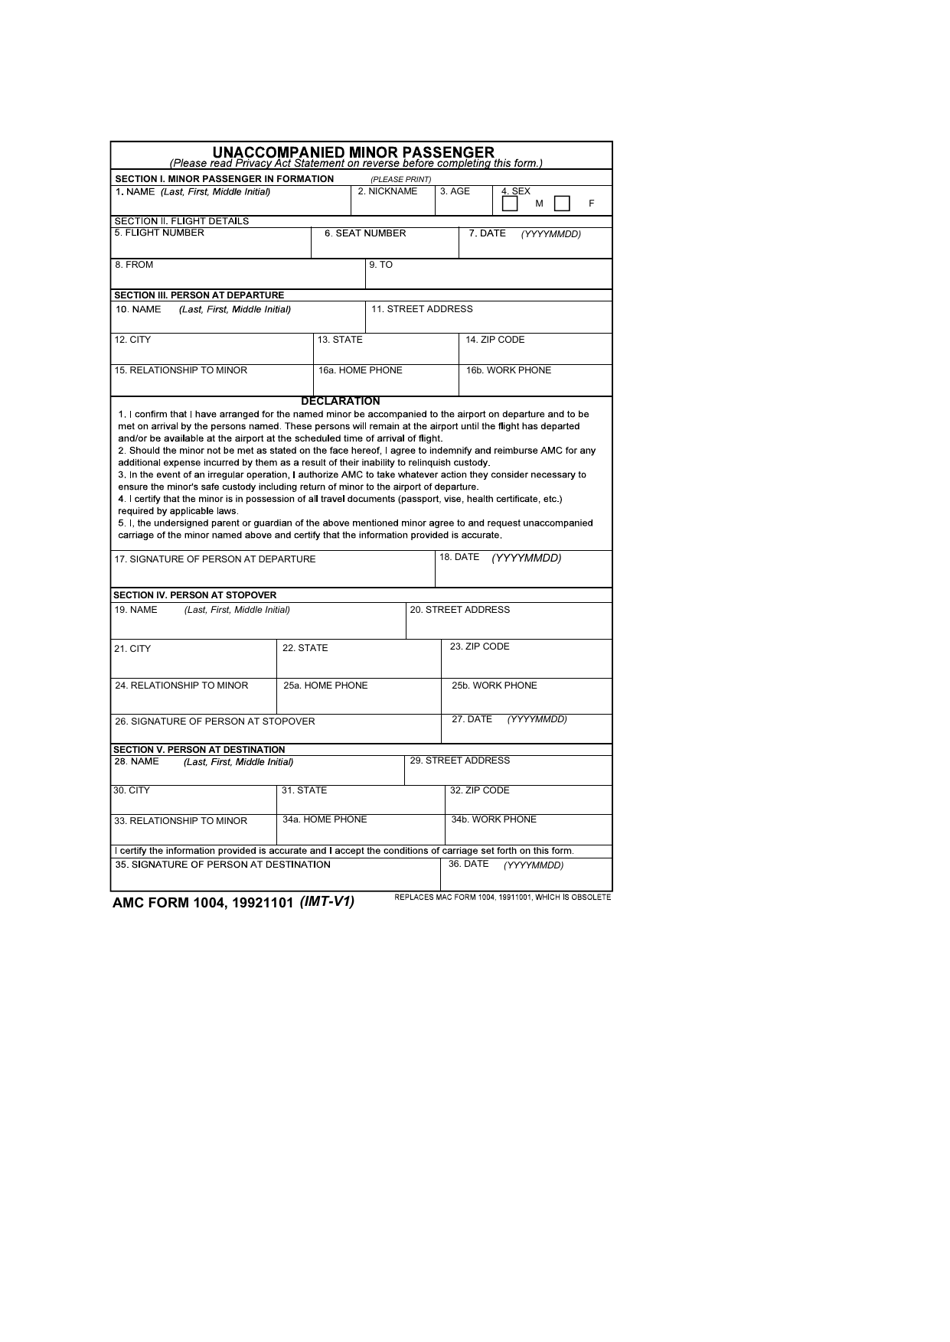 AMC Form 1004 Unaccompanied Minor Passenger, Page 1